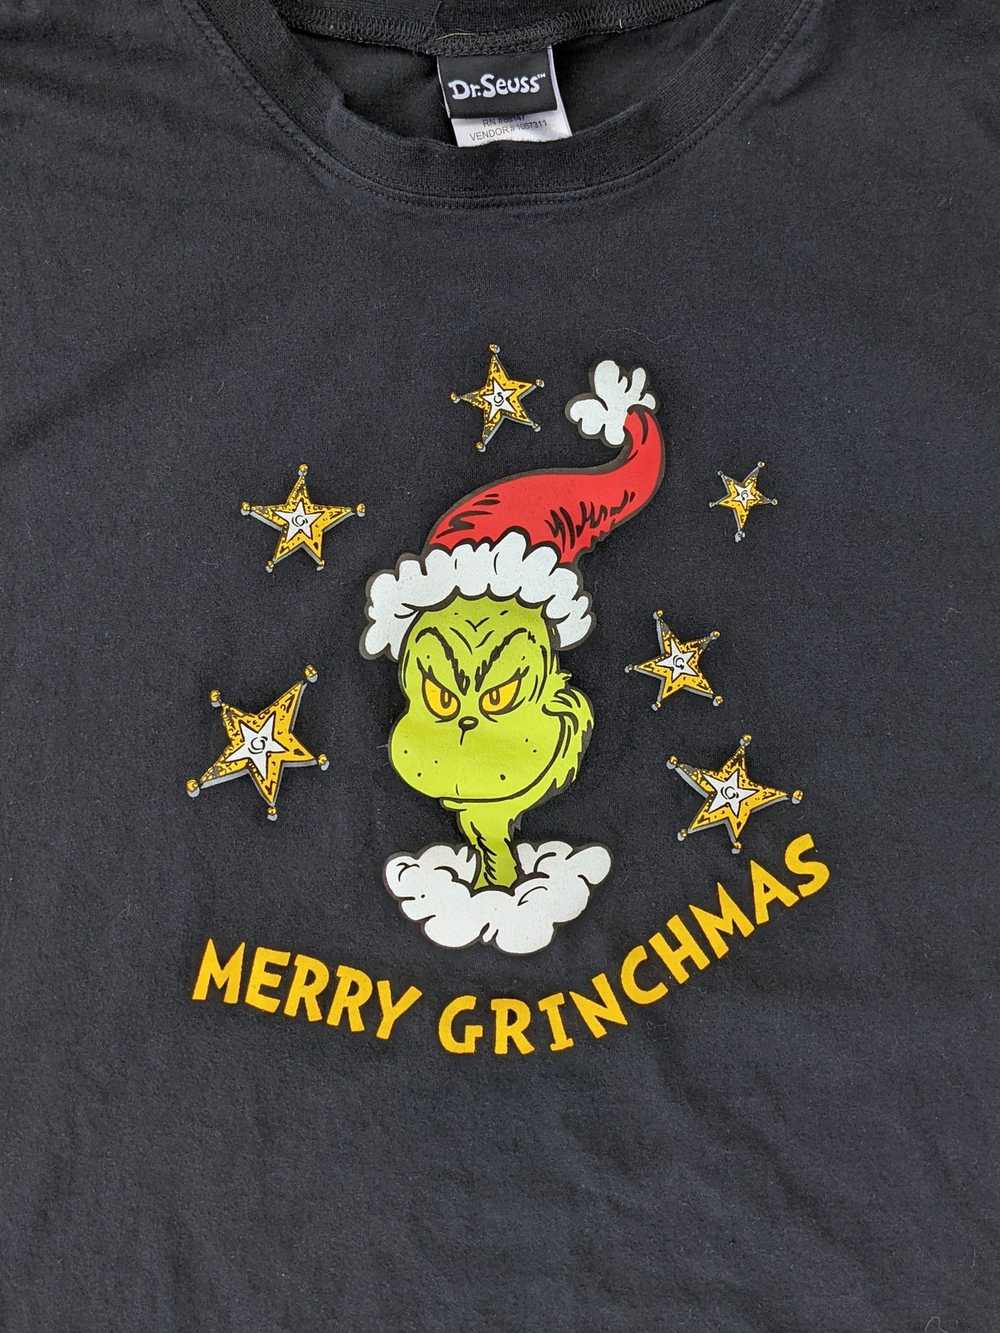 Other Dr. Seuss Merry Grinchmas Christmas t-shirt - image 2